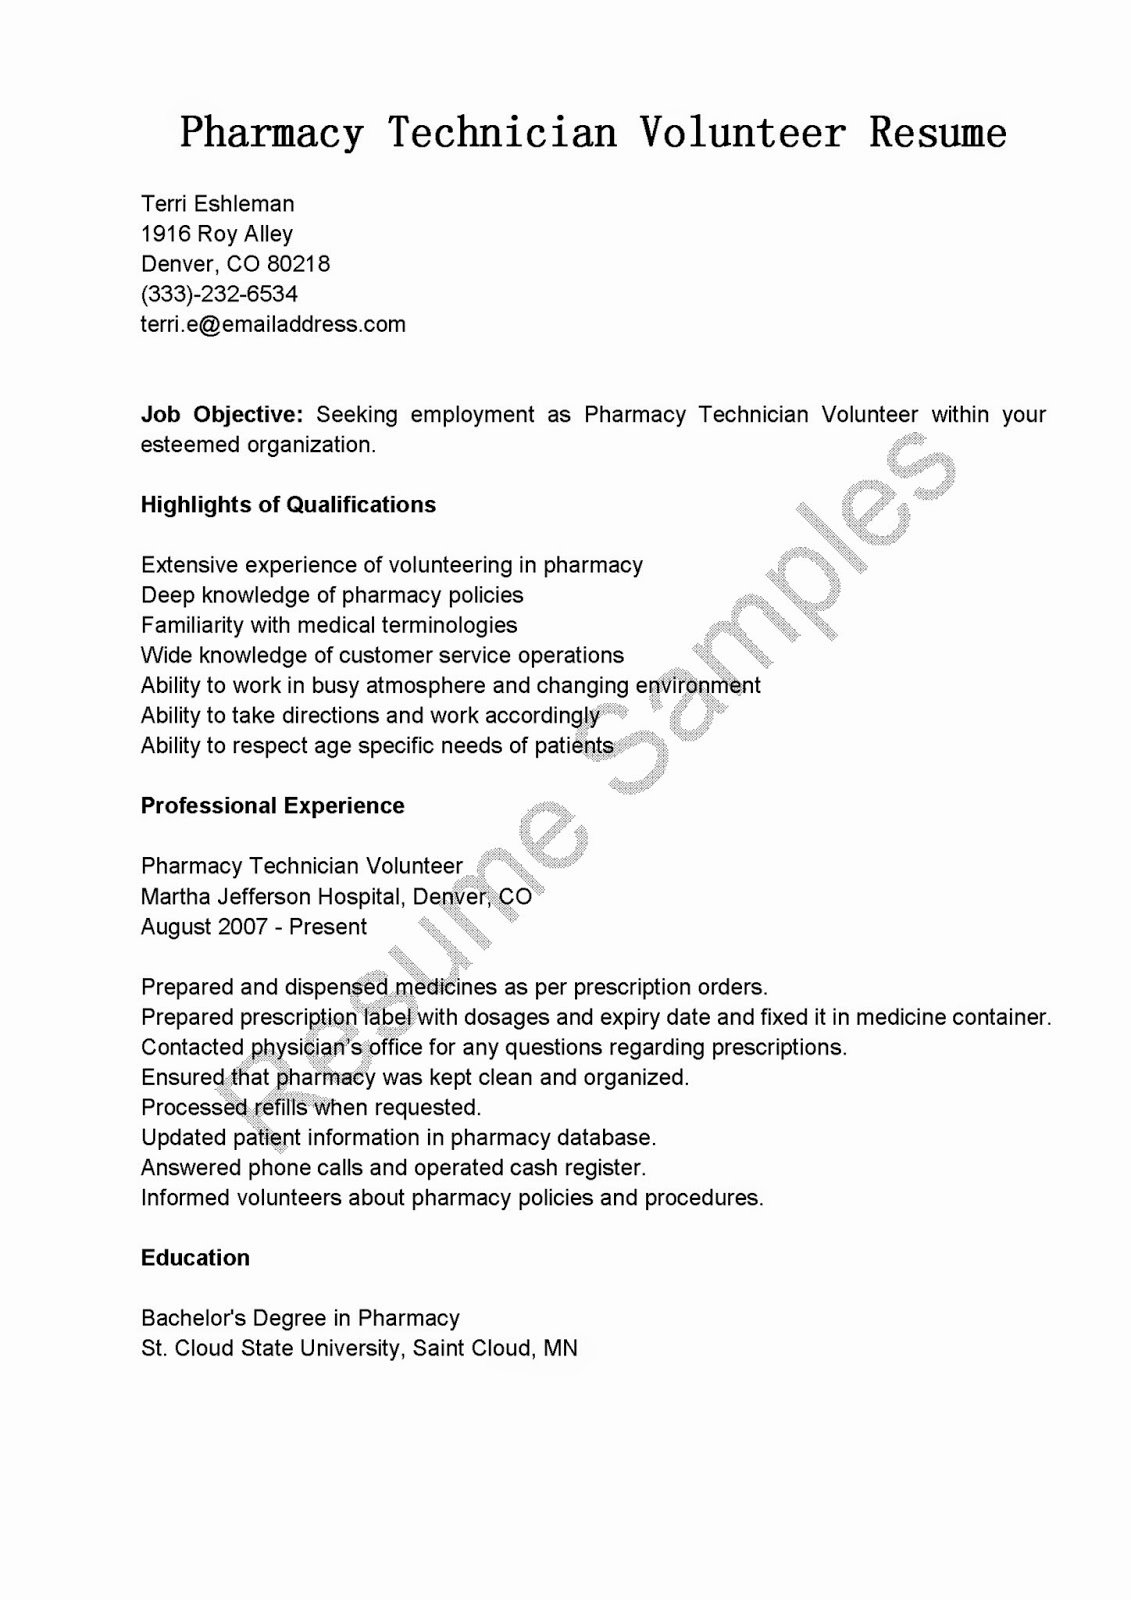 Resume Samples Pharmacy Technician Volunteer Resume Sample